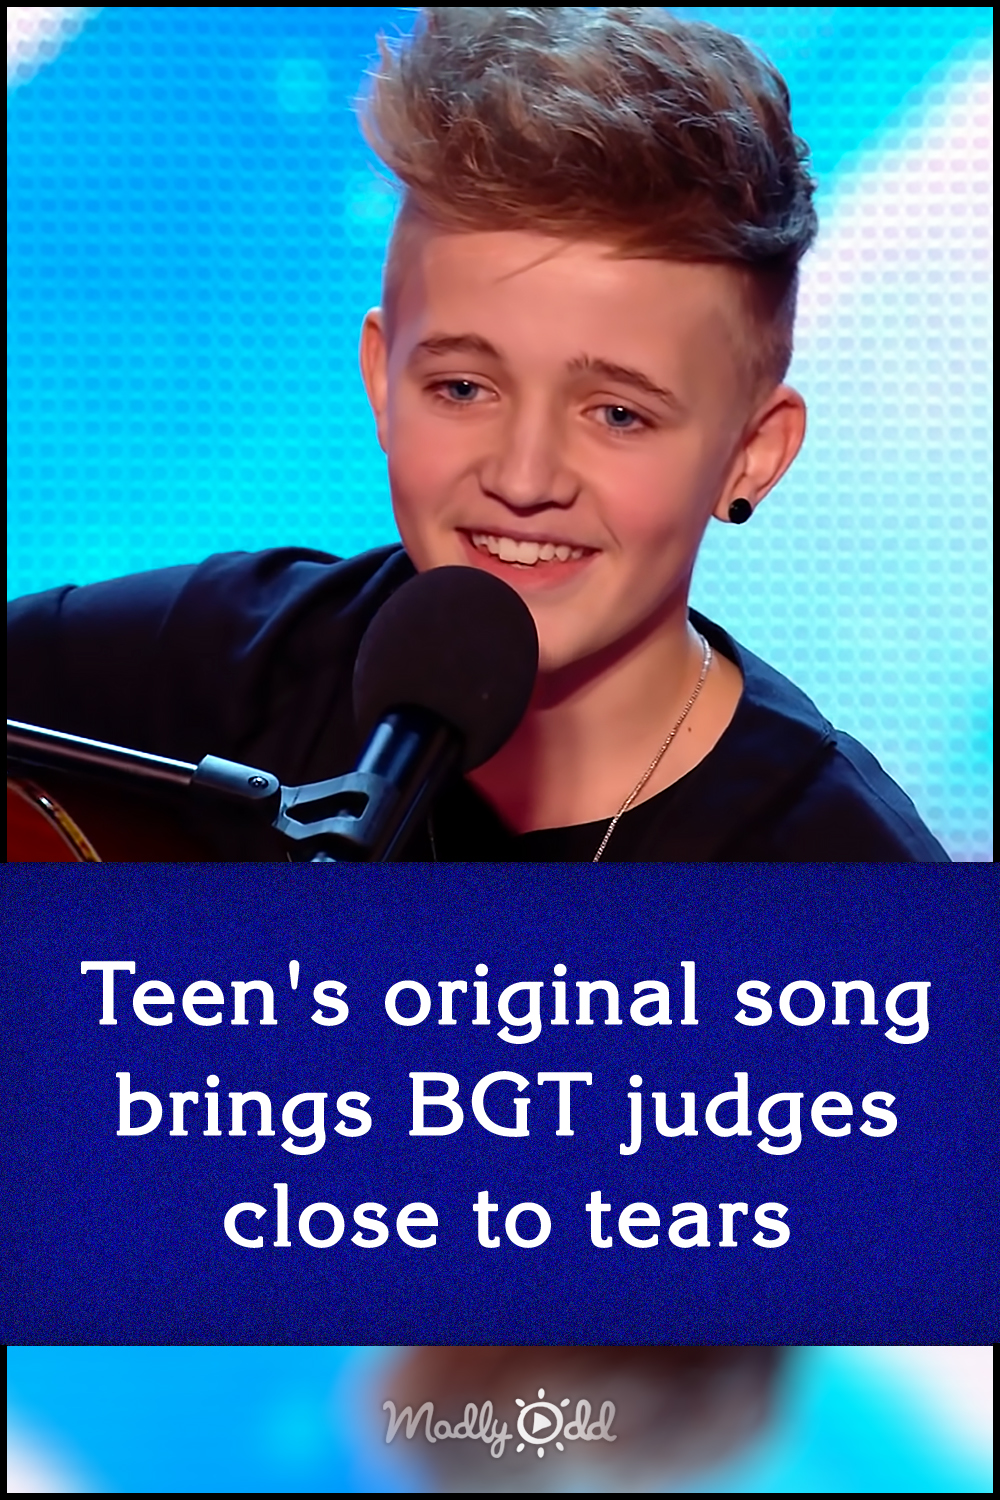 Teen’s original song brings BGT judges close to tears – Madly Odd!